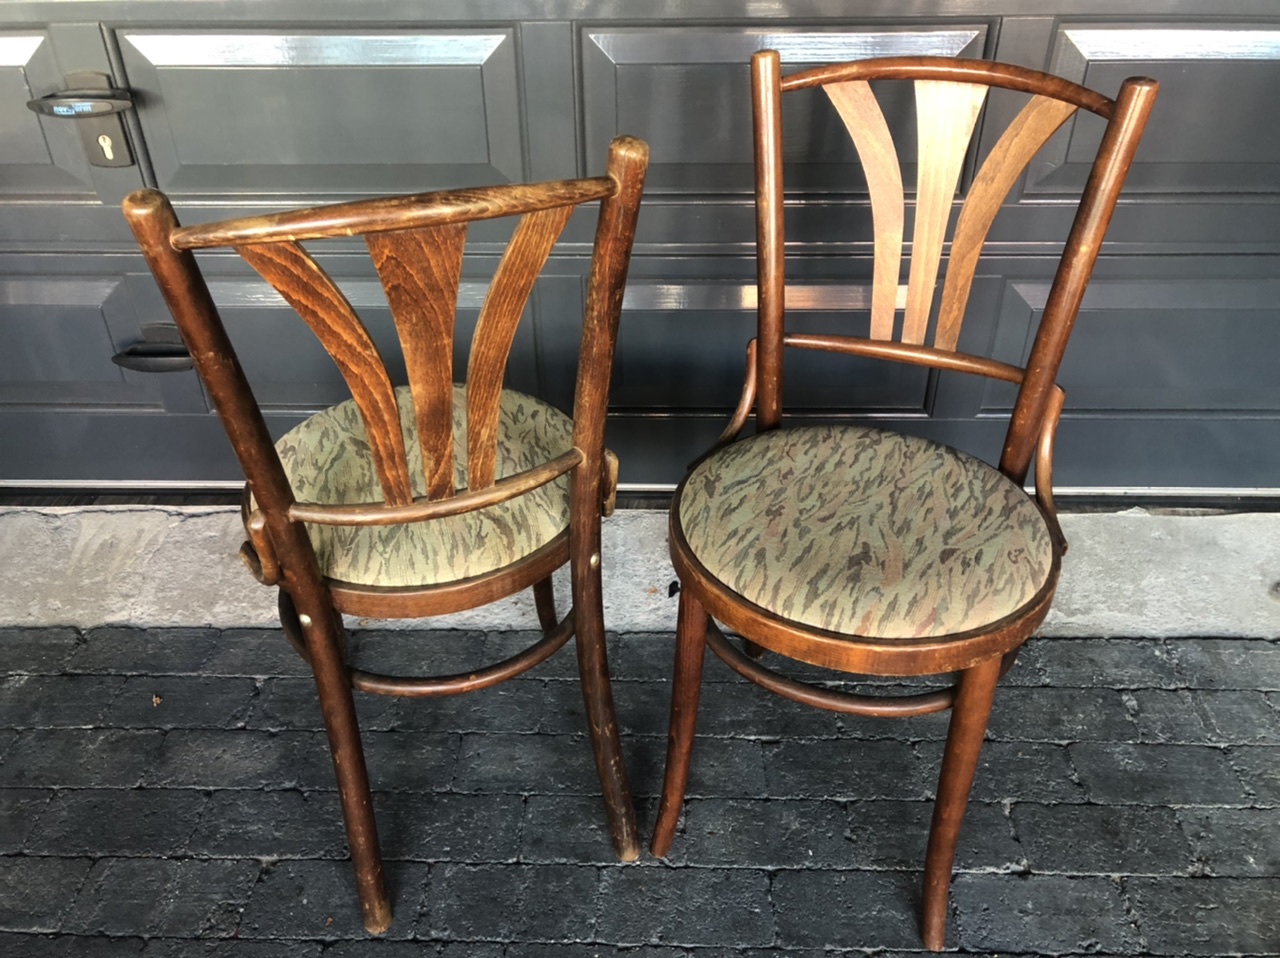 Bruin cafe stoelen authentieke antiek thonet kroeg mancave stoelen bar